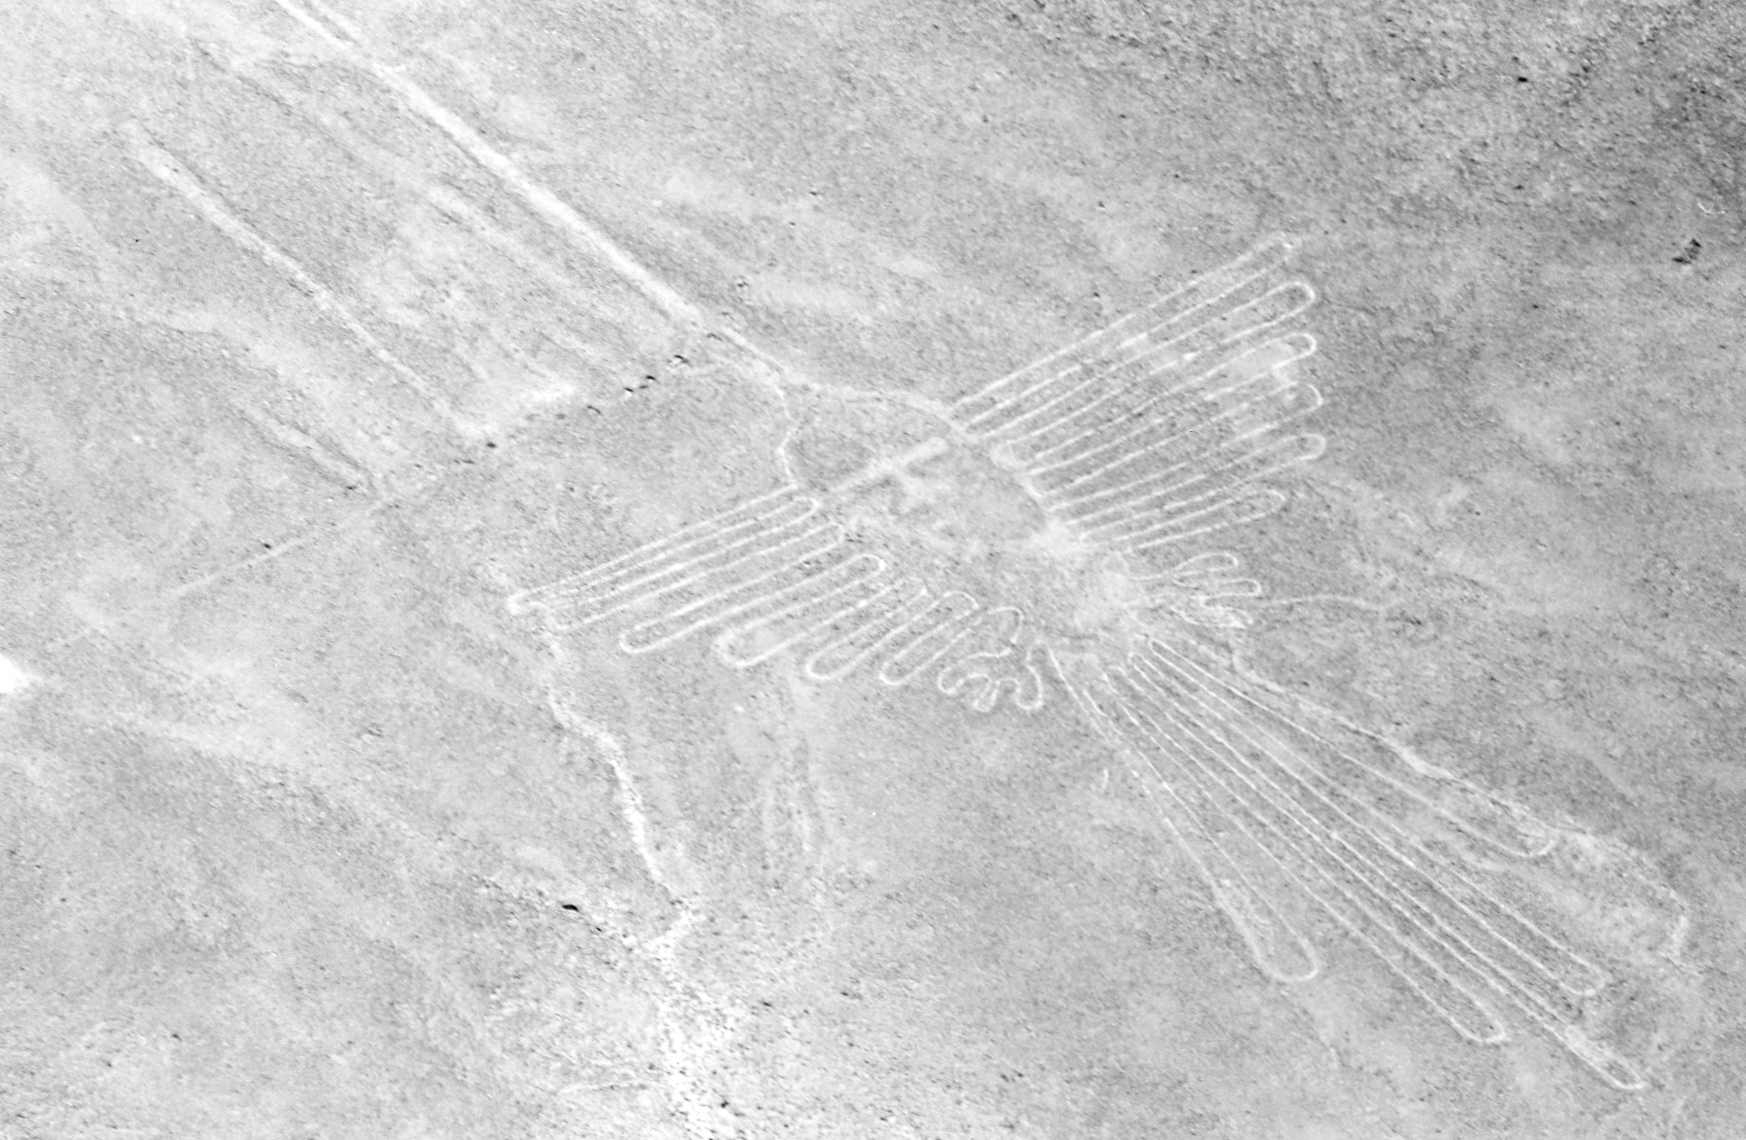 Nazca_lines_hummingbird.jpg